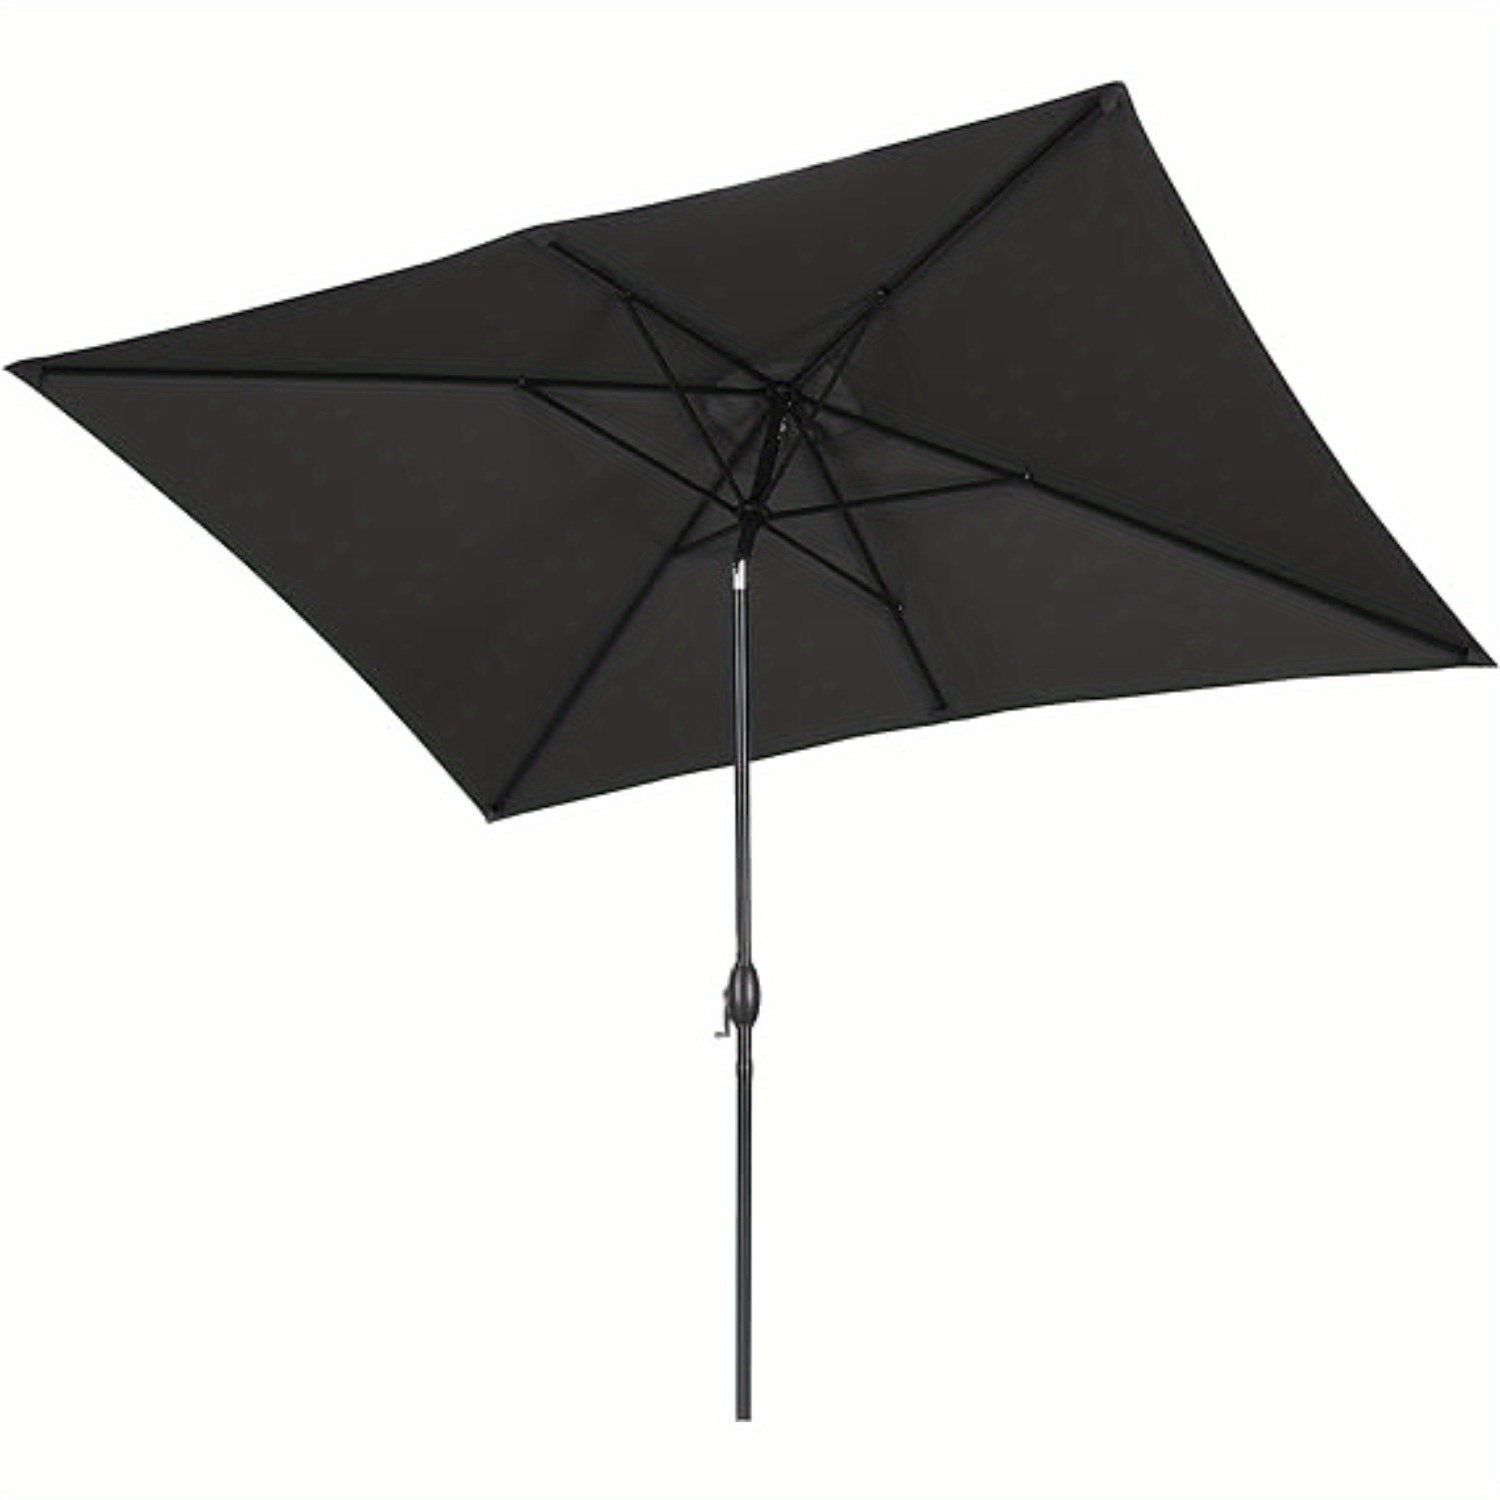 

Outdoor 6.5 X 10 Ft Rectangular Patio Umbrella Aluminum Pole, Outdoor Table Market Umbrella With Crank, 6 Steel Ribs, Polyester Canopy